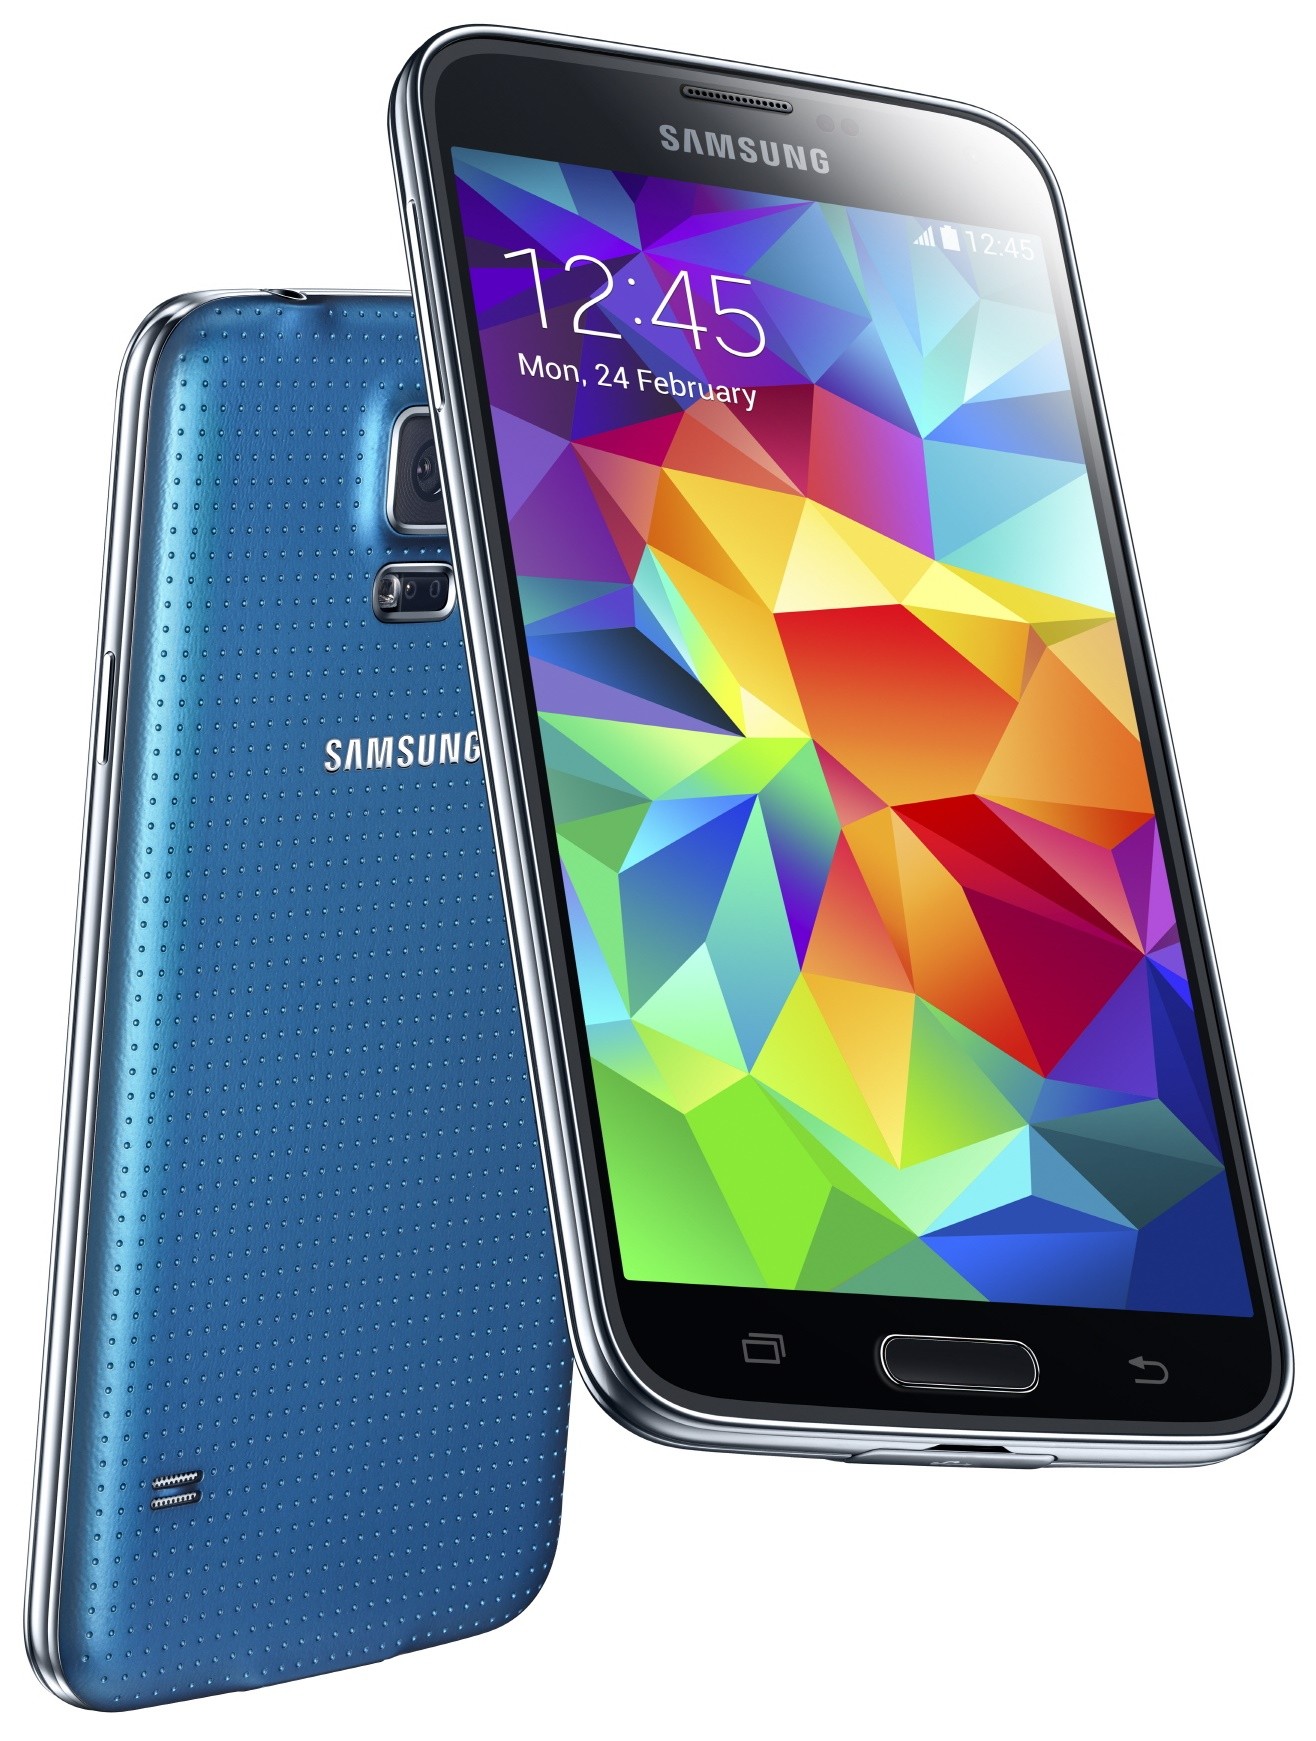 A5 gold. Samsung Galaxy s5 SM-g900f 16gb. Samsung Galaxy s5 Mini. Samsung Galaxy s5 Mini Duos. Samsung Galaxy g800h.